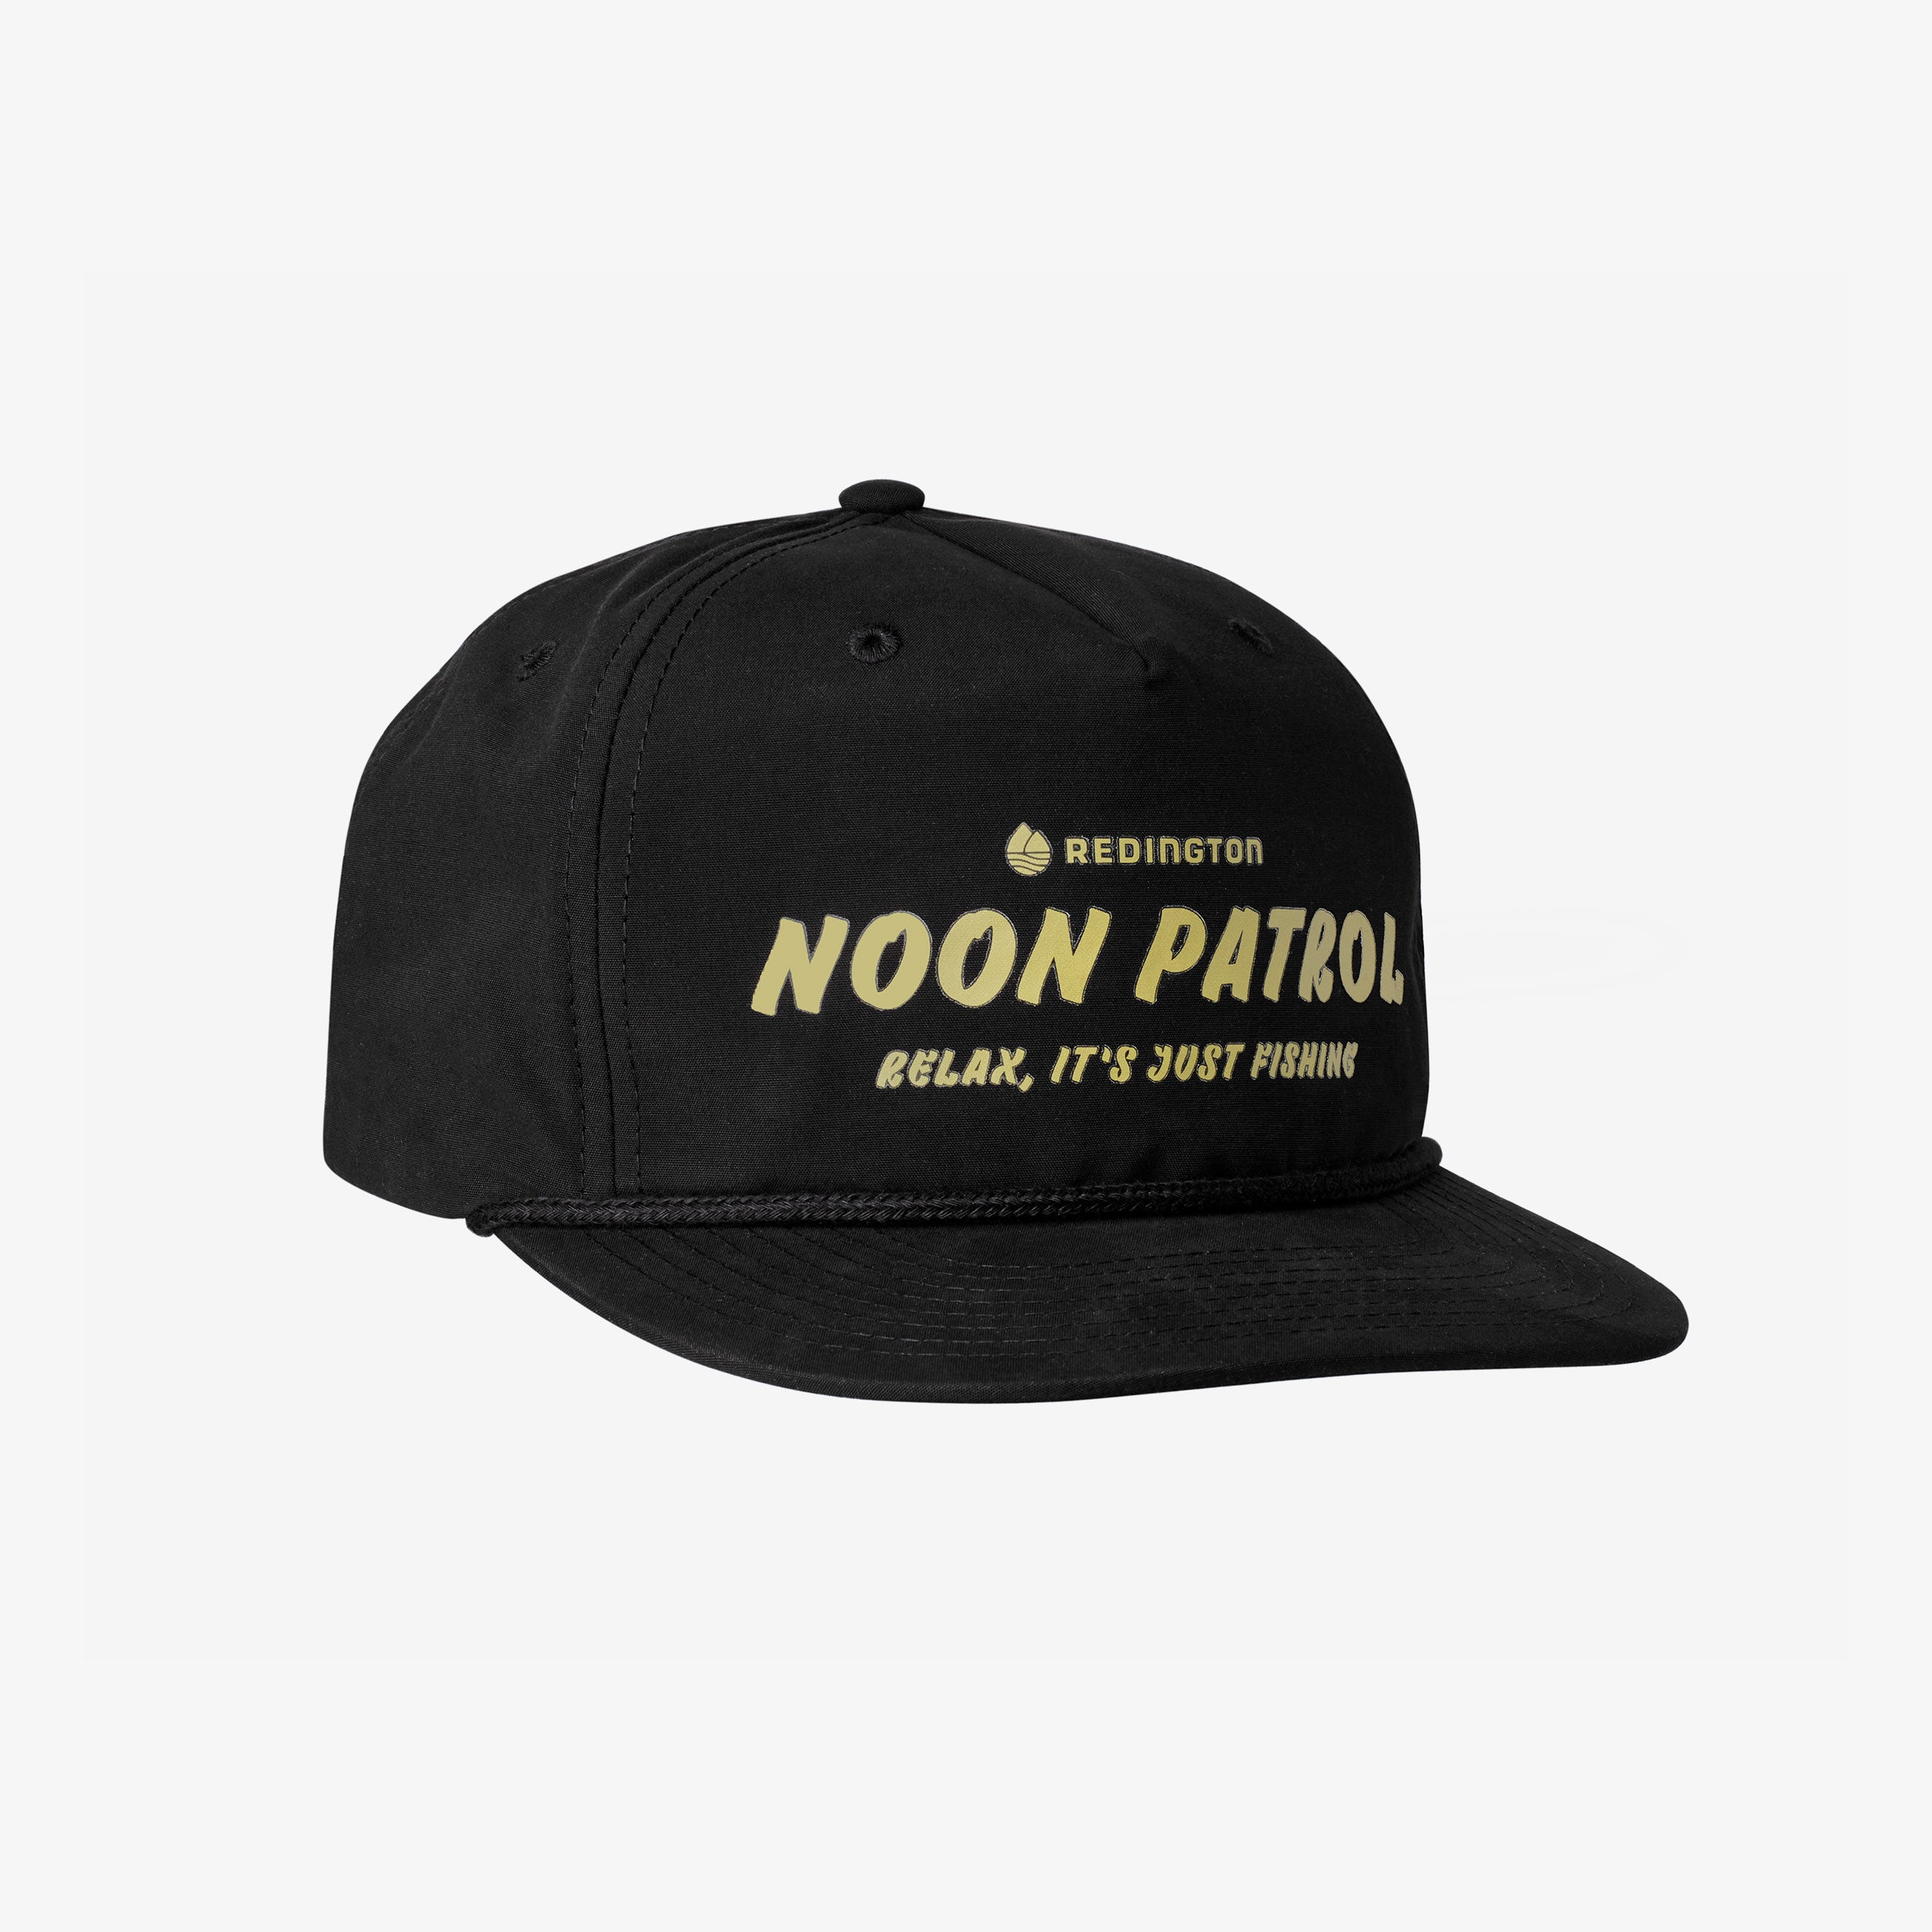 Redington Noon Patrol Hat - Black